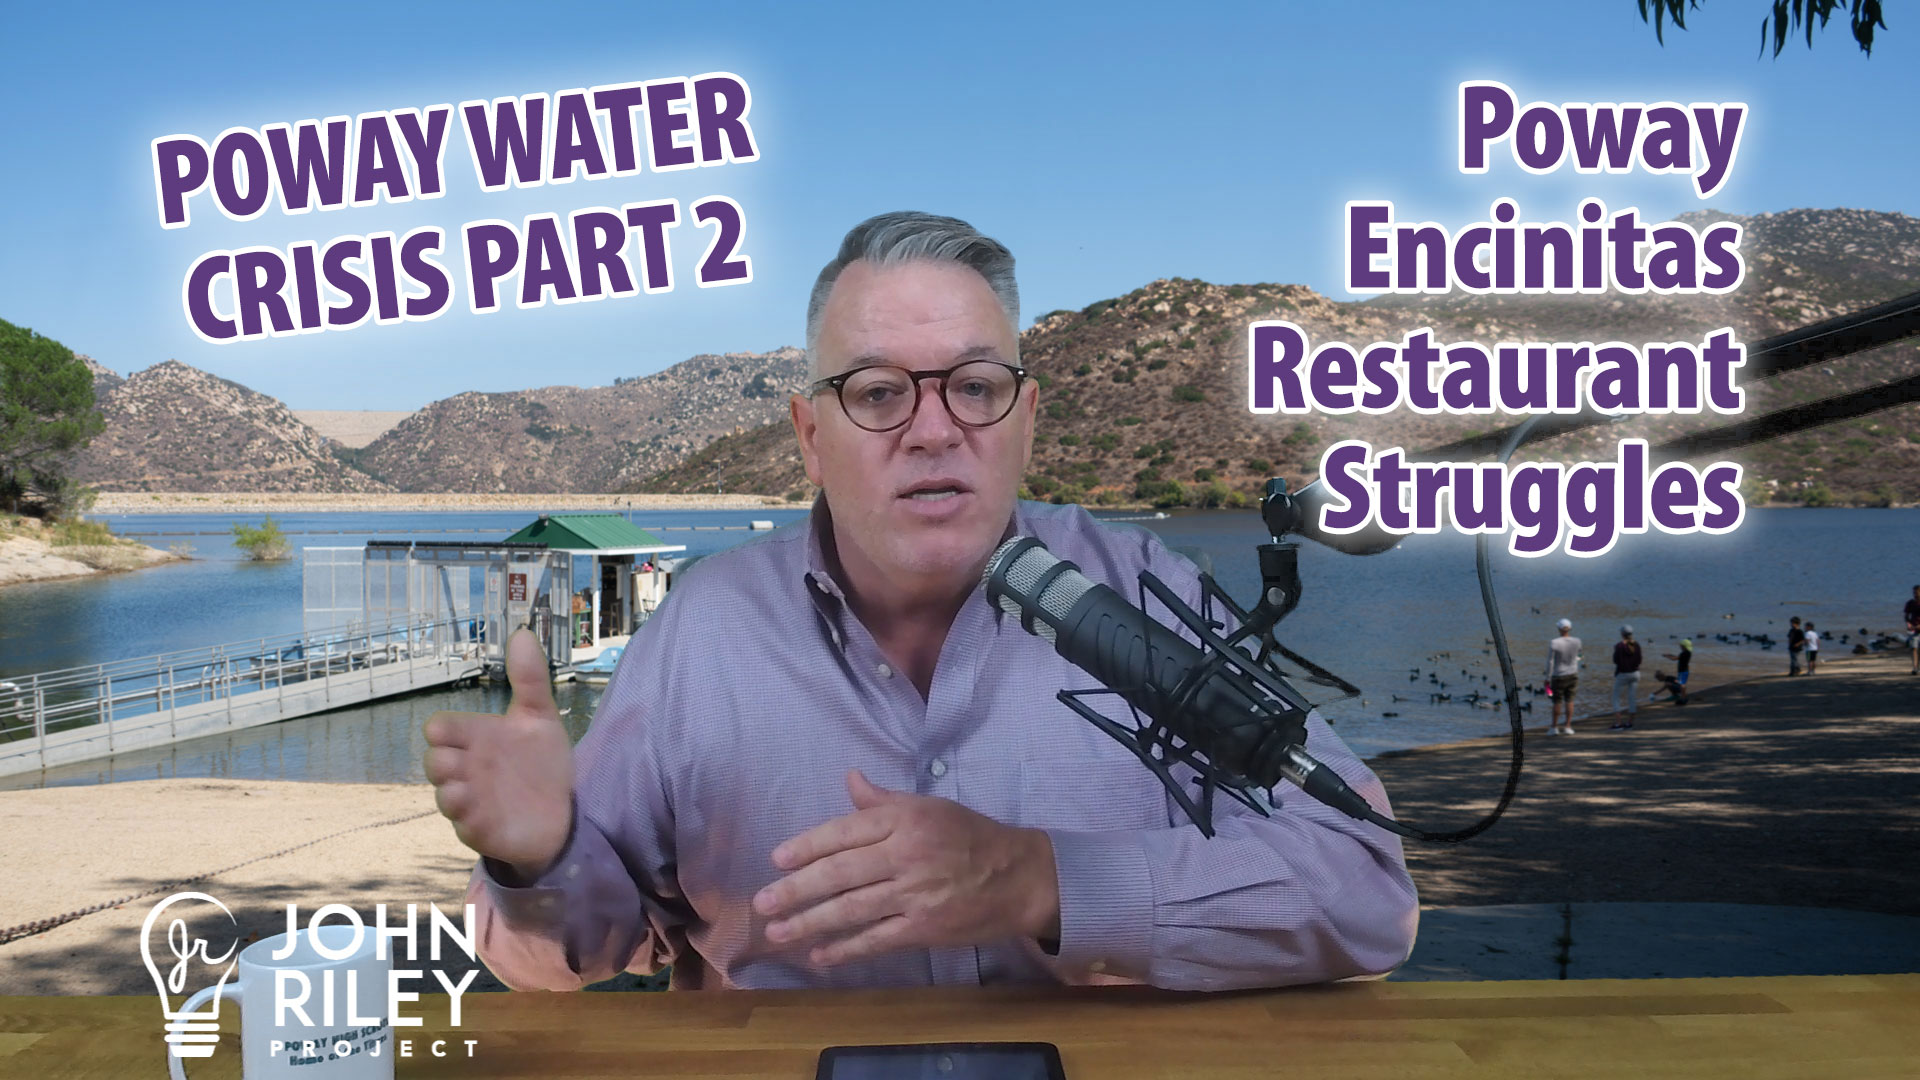 Poway Water Crisis Part 2, Poway Restaurants, Encinitas, John Riley Project, JRP0098